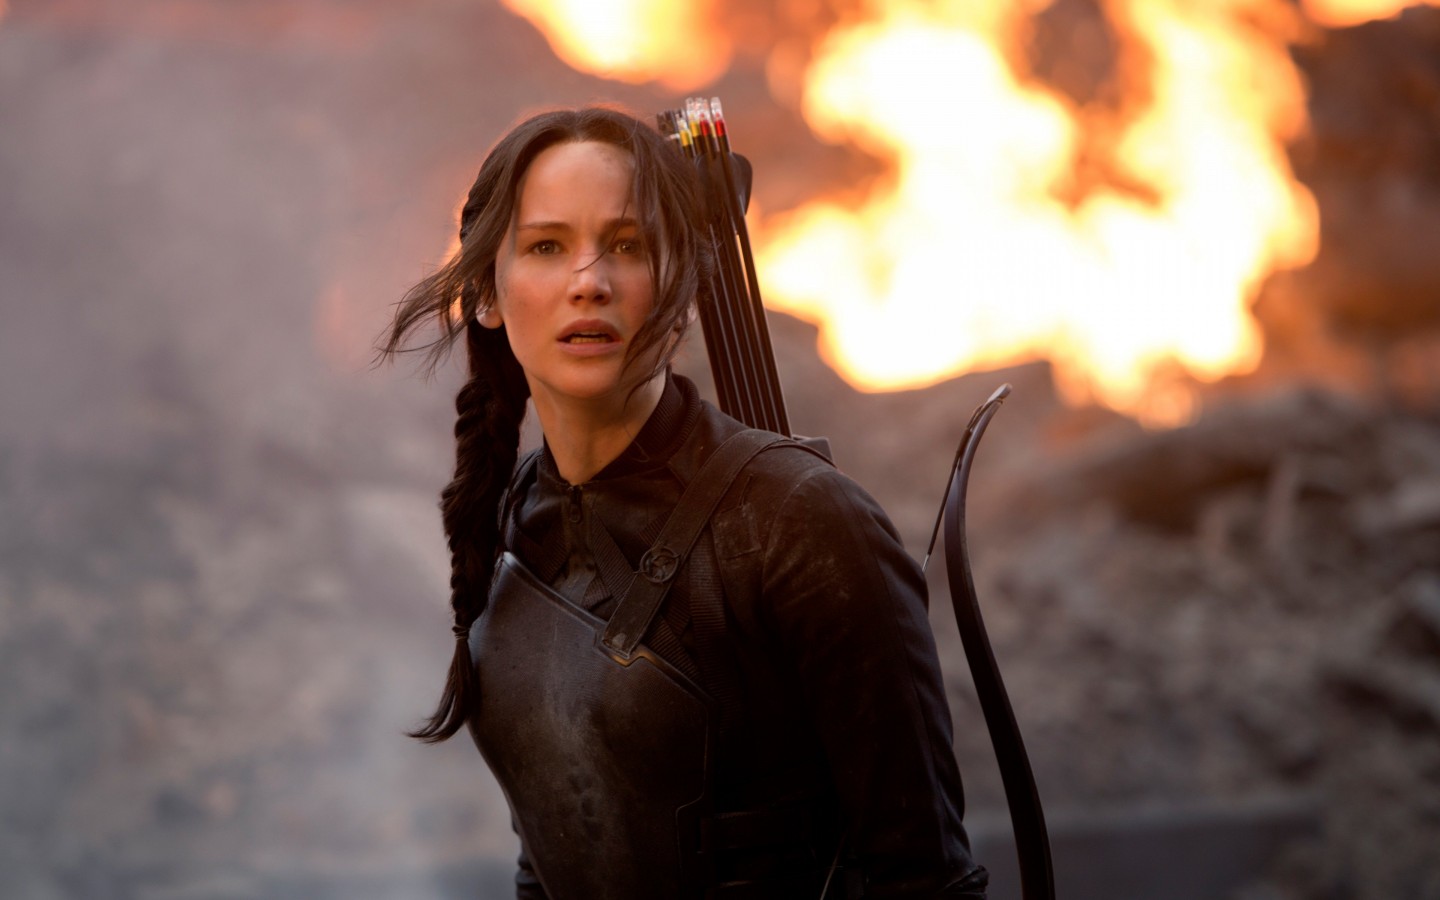 Jennifer Lawrence in The Hunger Games Wallpaper for Desktop 1440x900